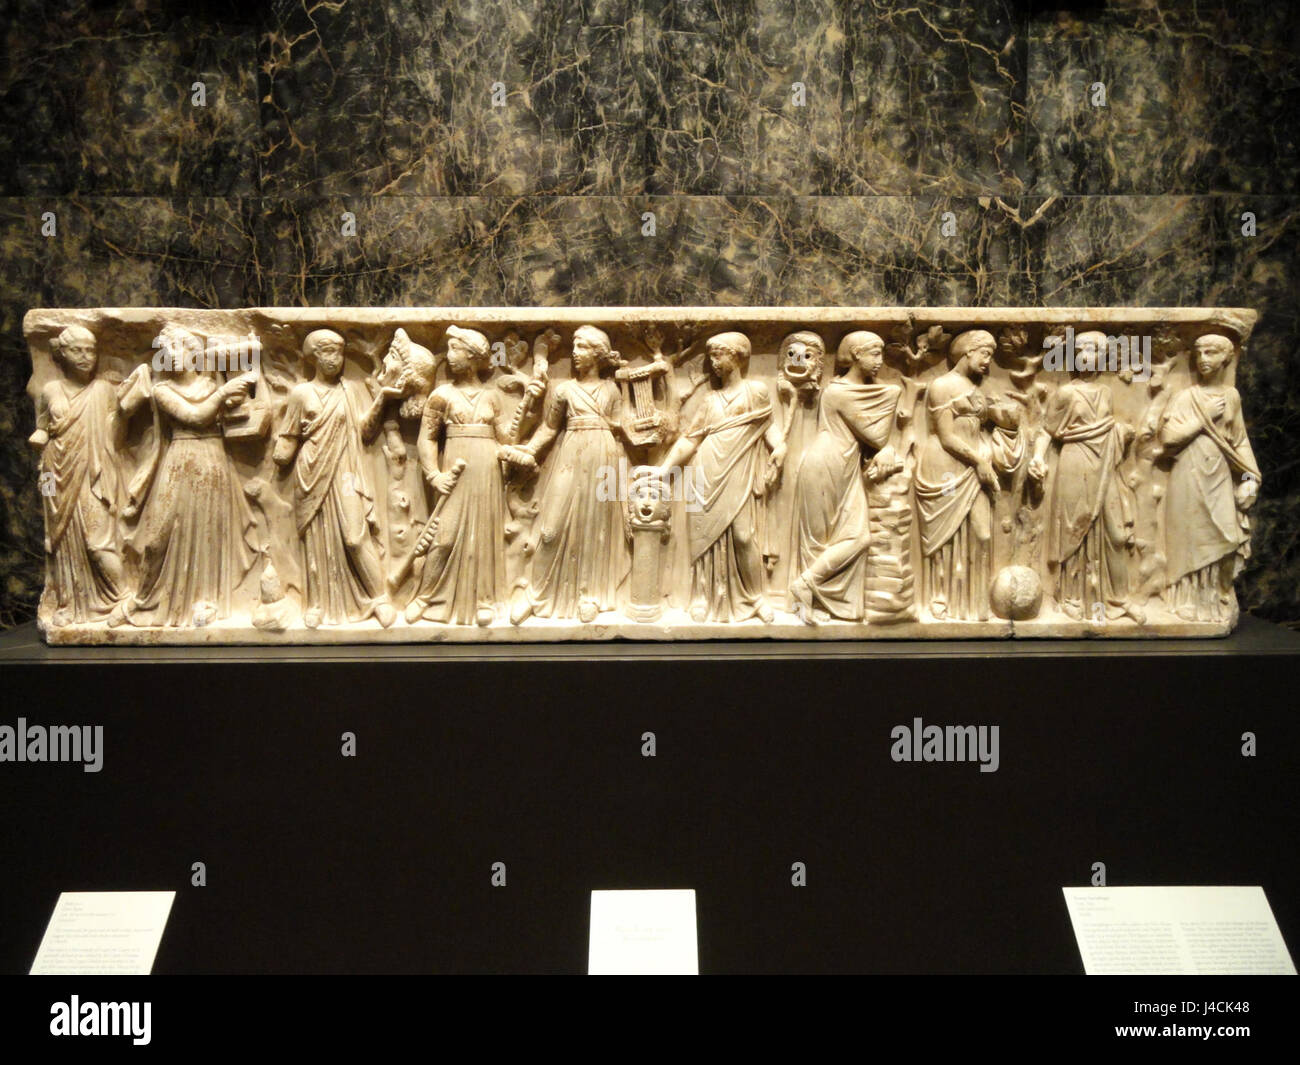 Roman sarcophagus, Italy, mid 2nd century CE   Nelson Atkins Museum of Art   DSC08243 Stock Photo